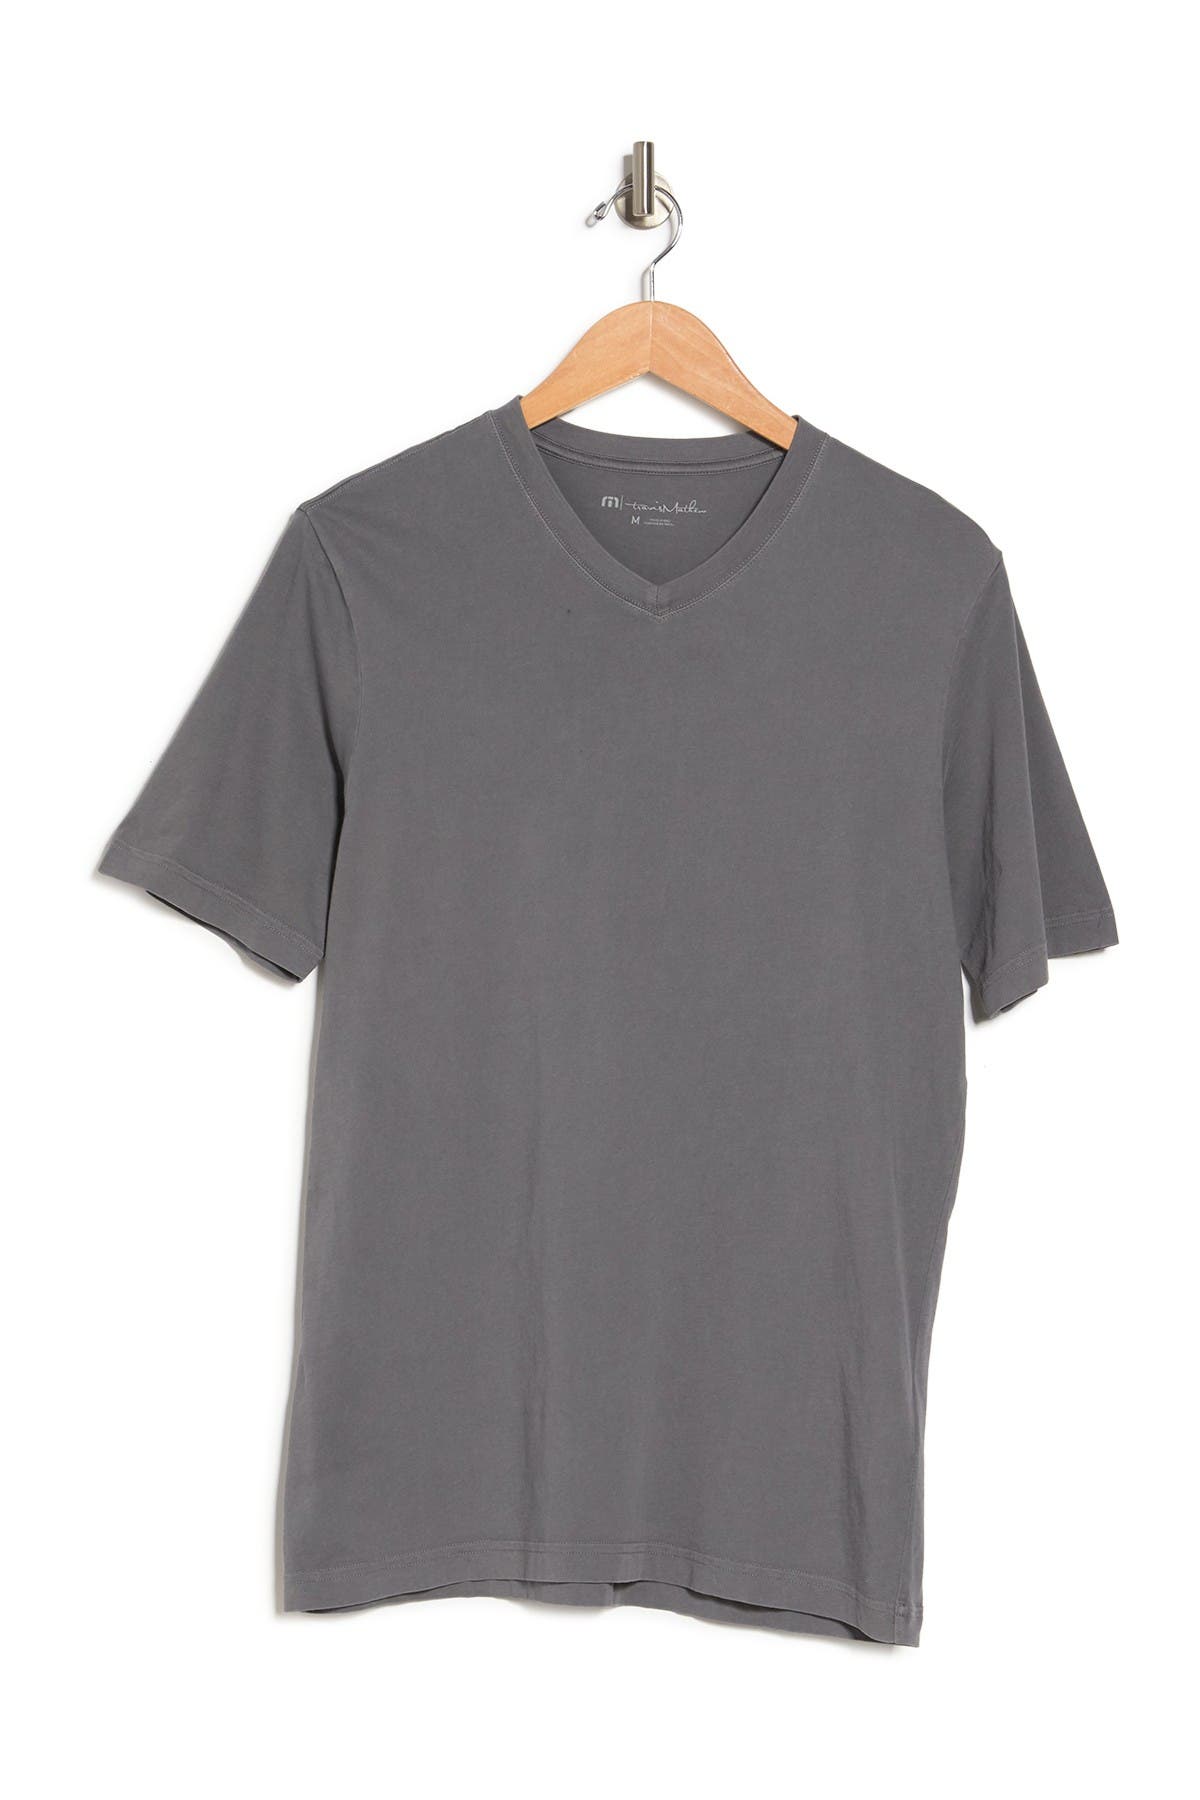 Travis Mathew Day Off Short Sleeve T-shirt In Grey Pinst